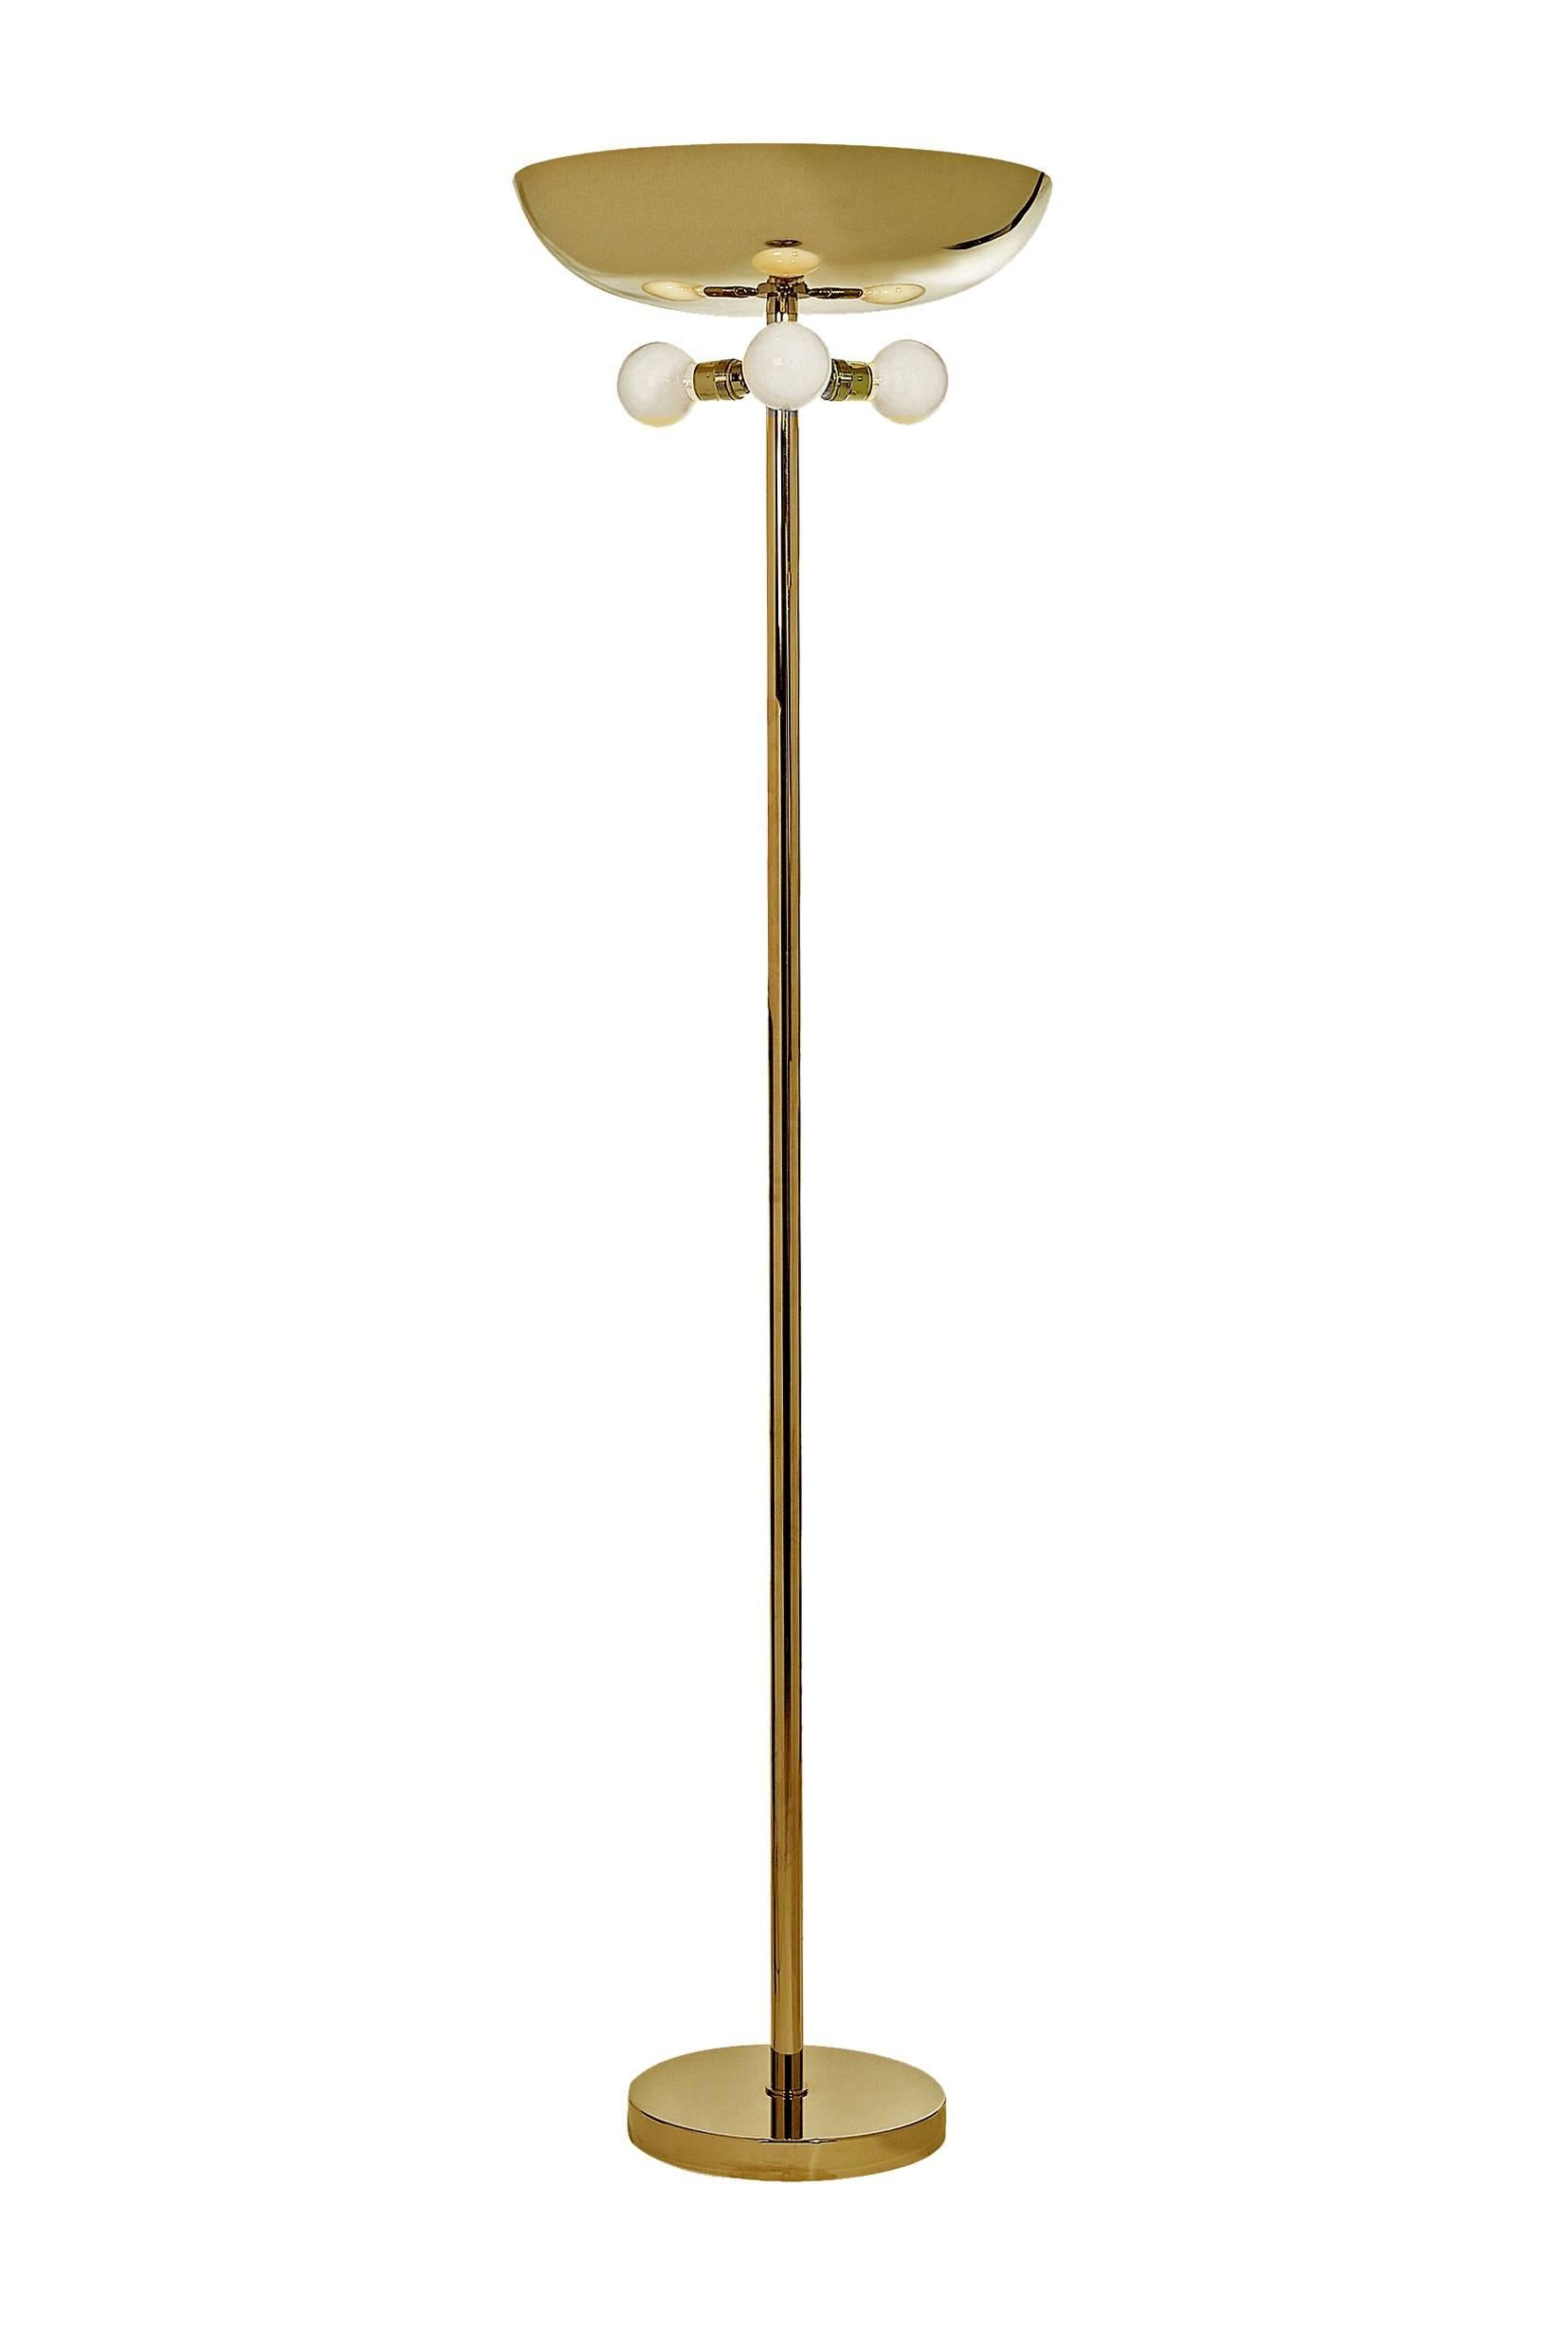 Hand-Crafted Deutsches Bauhaus Art Deco Style Brass Floor Lamp Torch, Re-Edition For Sale